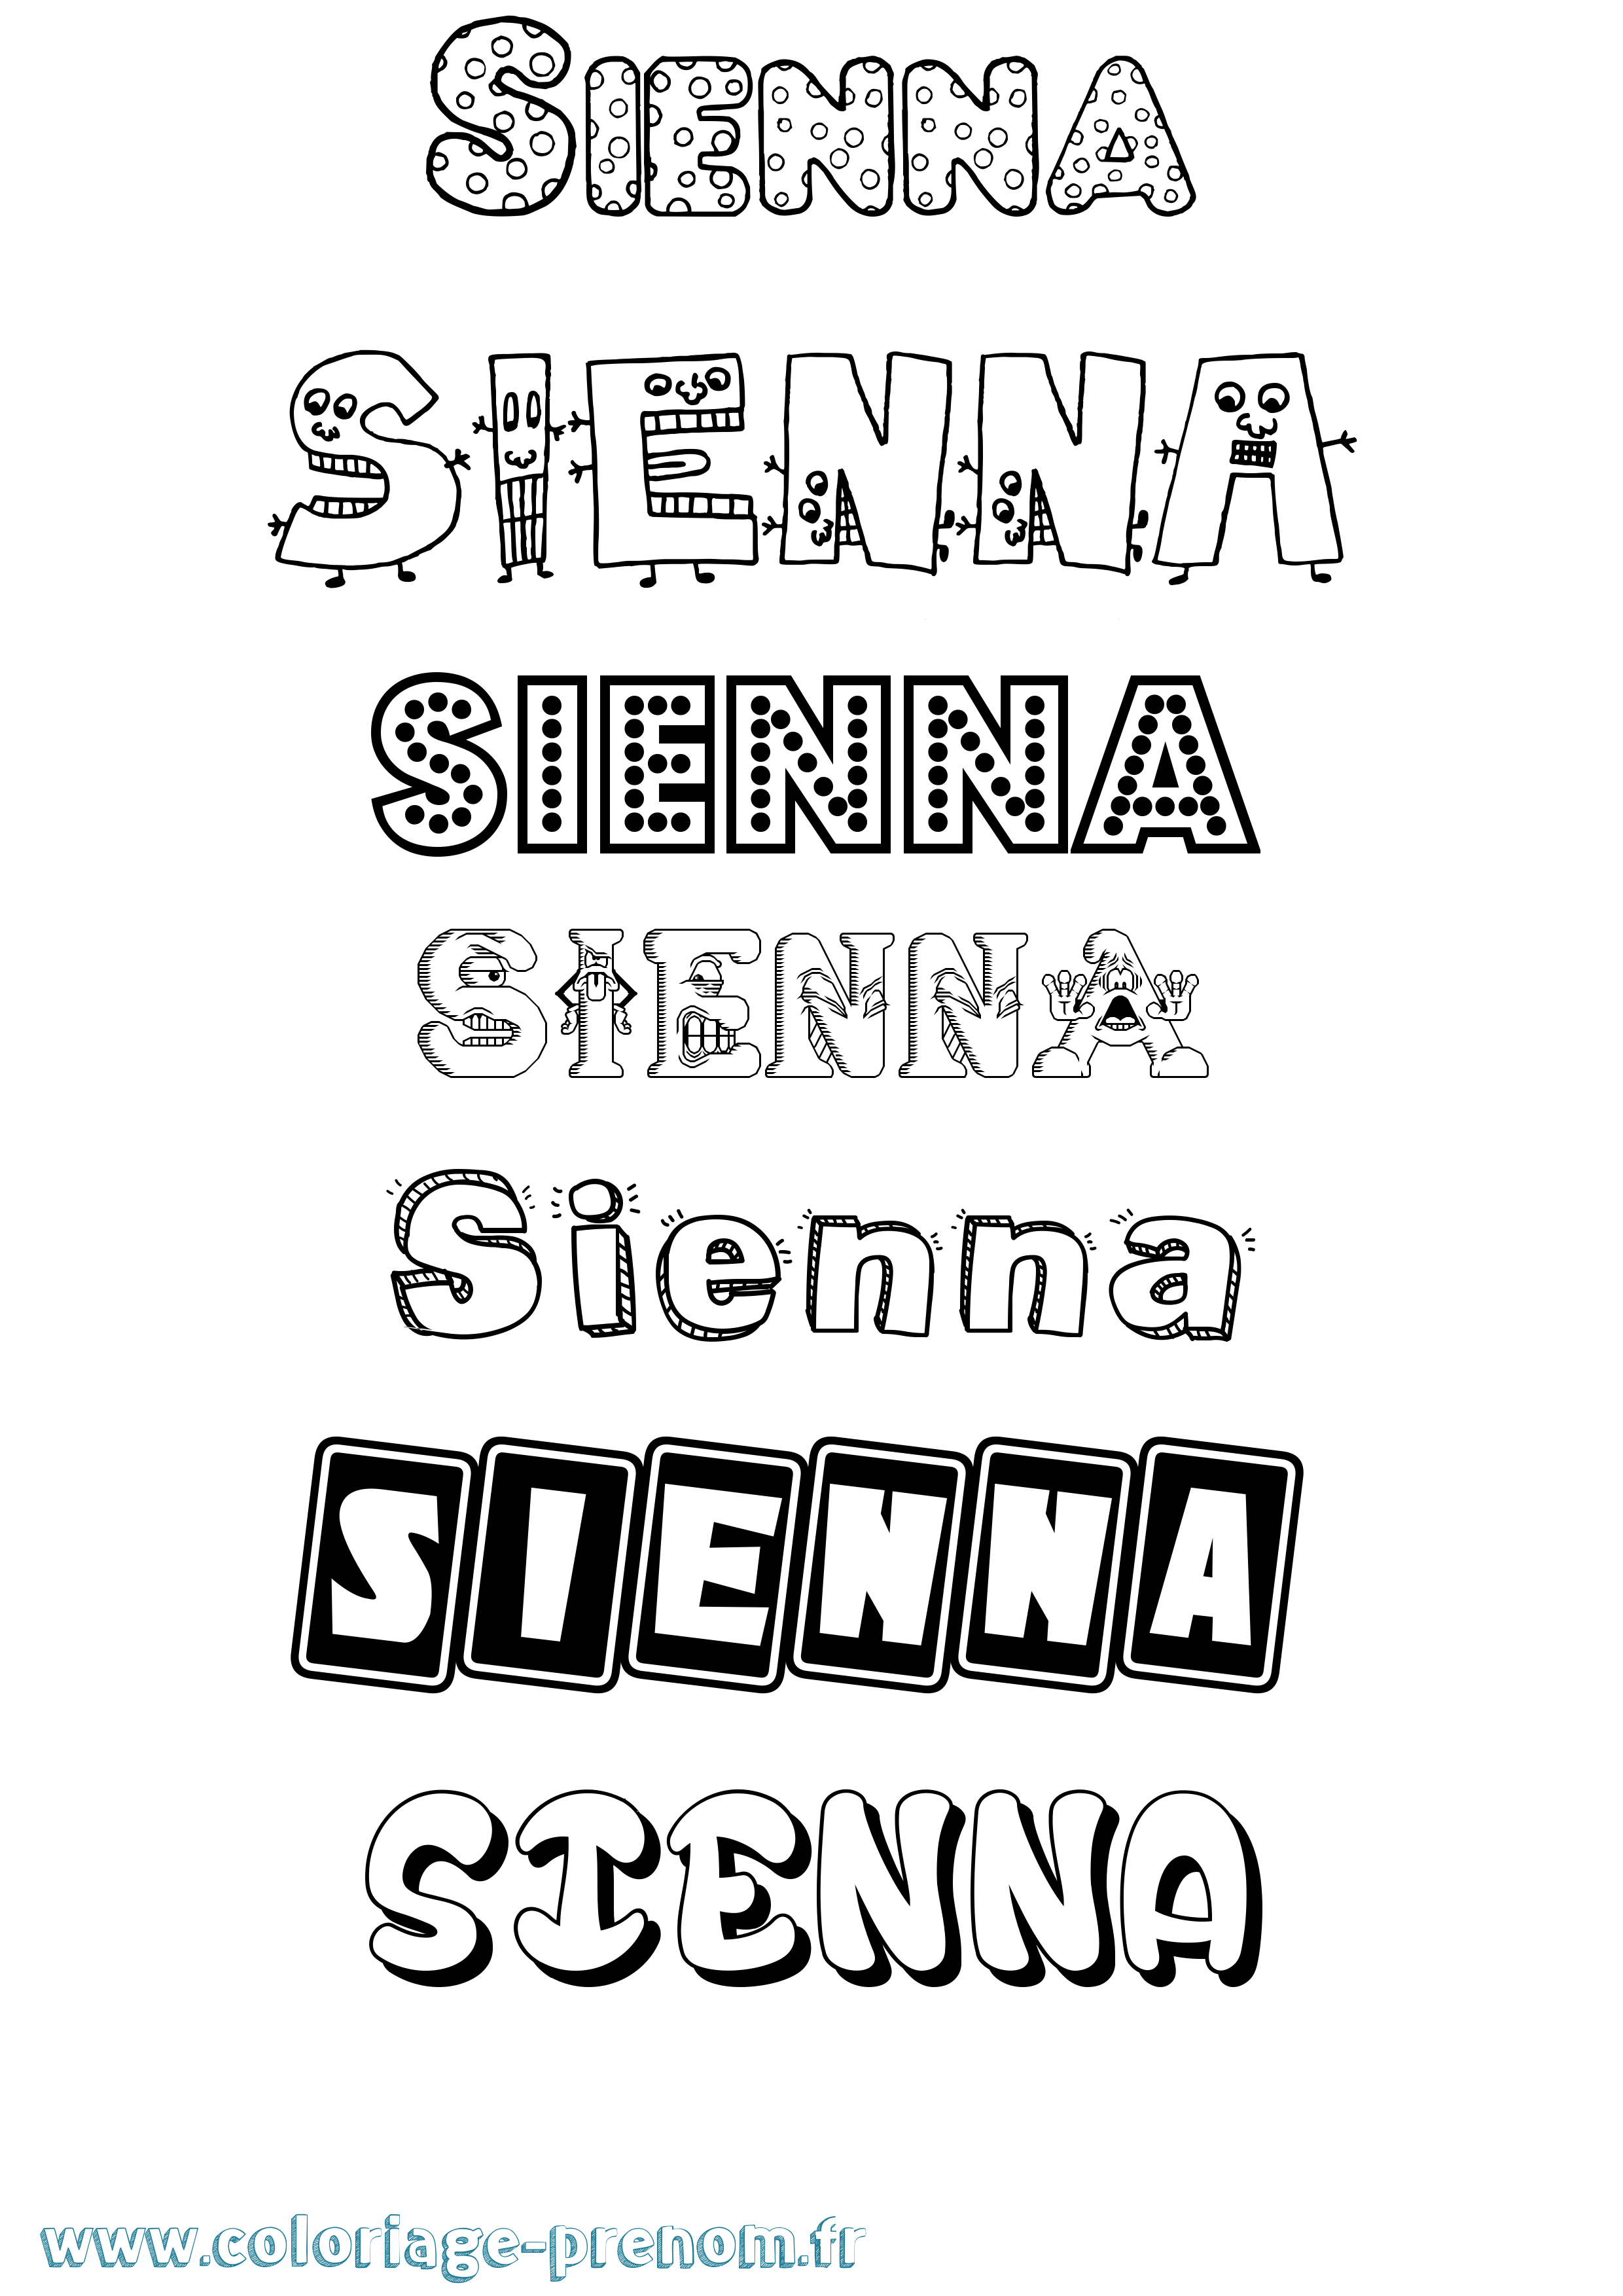 Coloriage prénom Sienna Fun